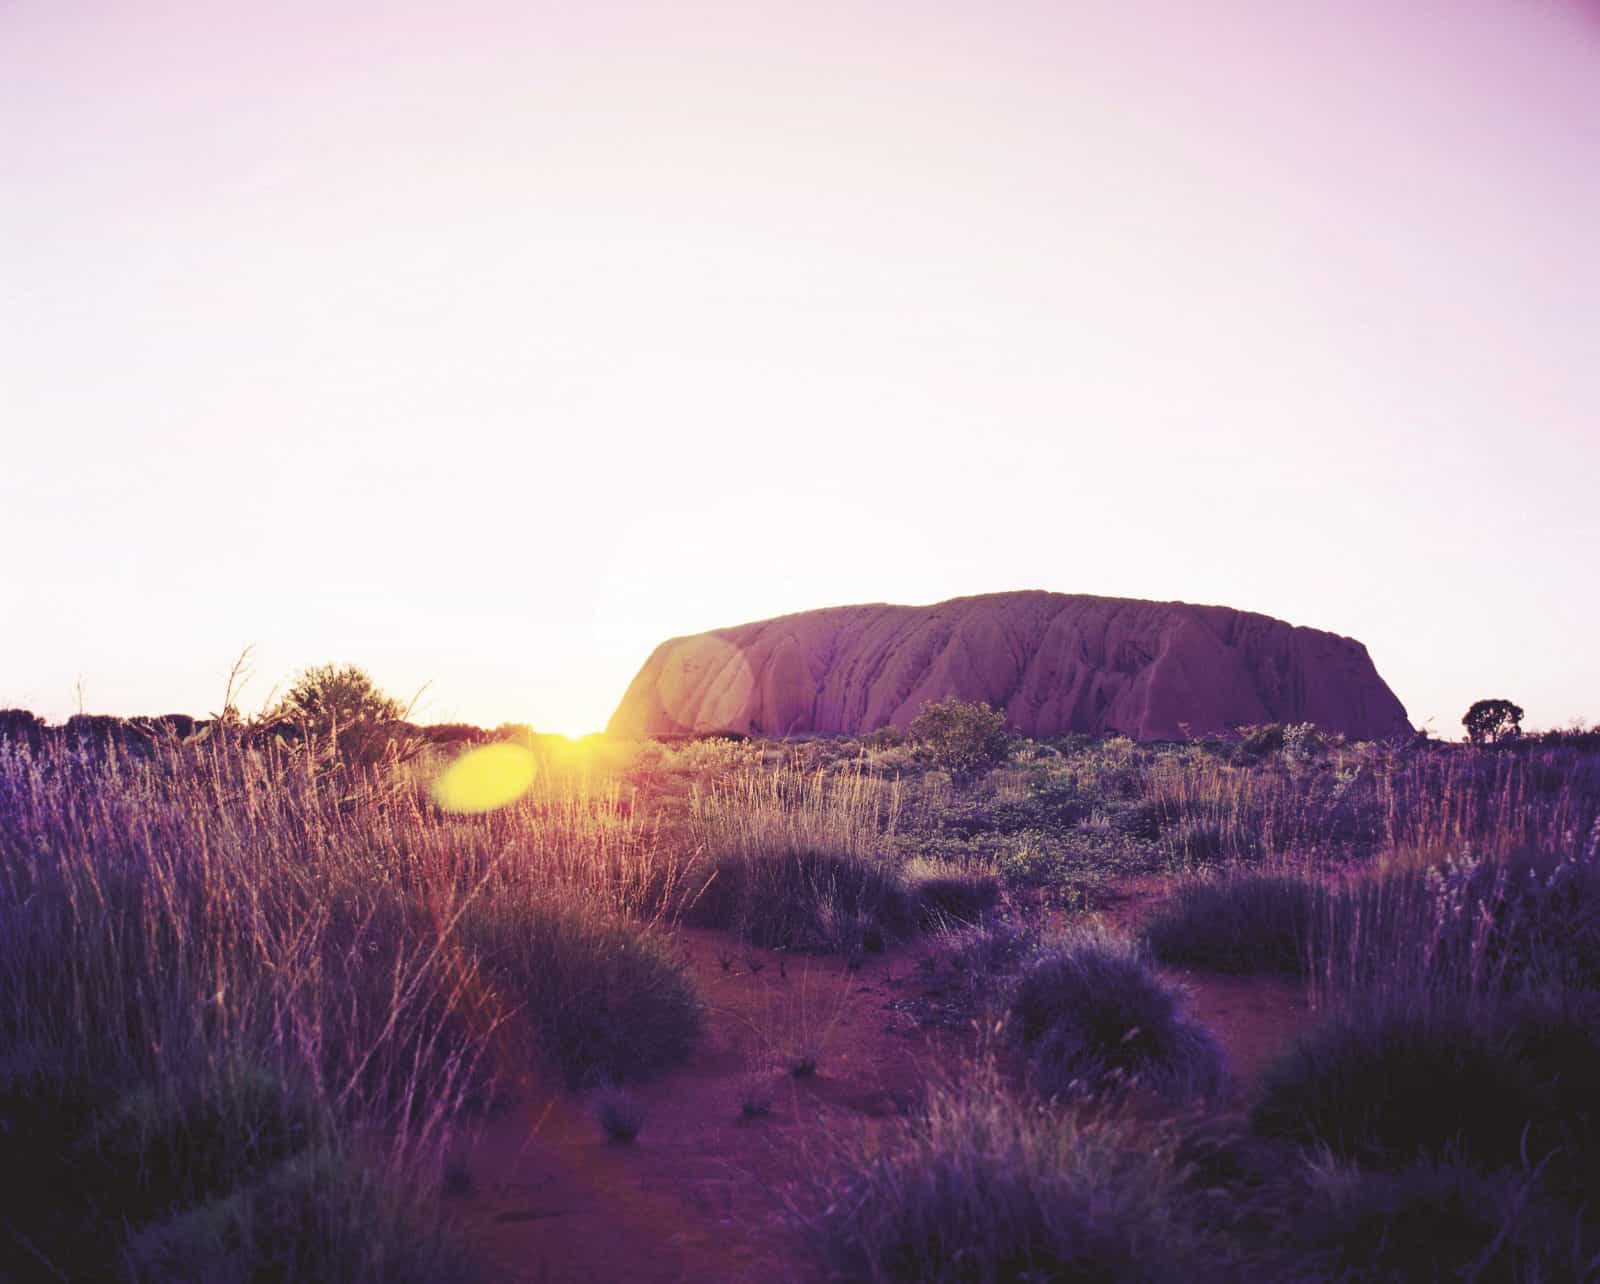 Uluru-Kata Tjuta National Park - Northern Territory, Australia